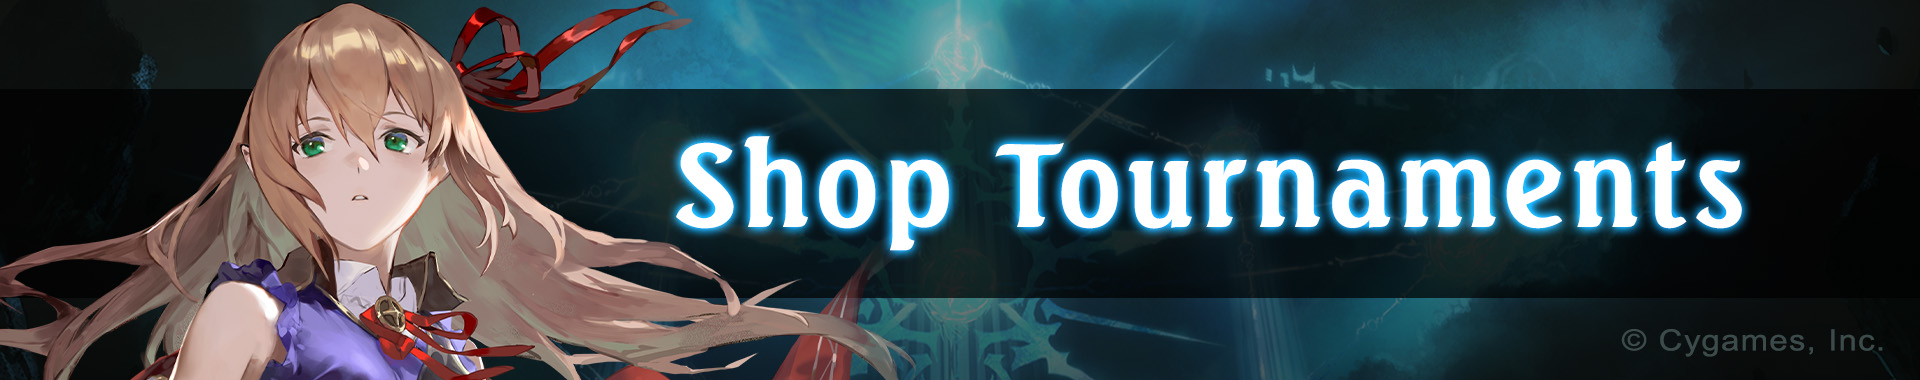 shop tournament banner